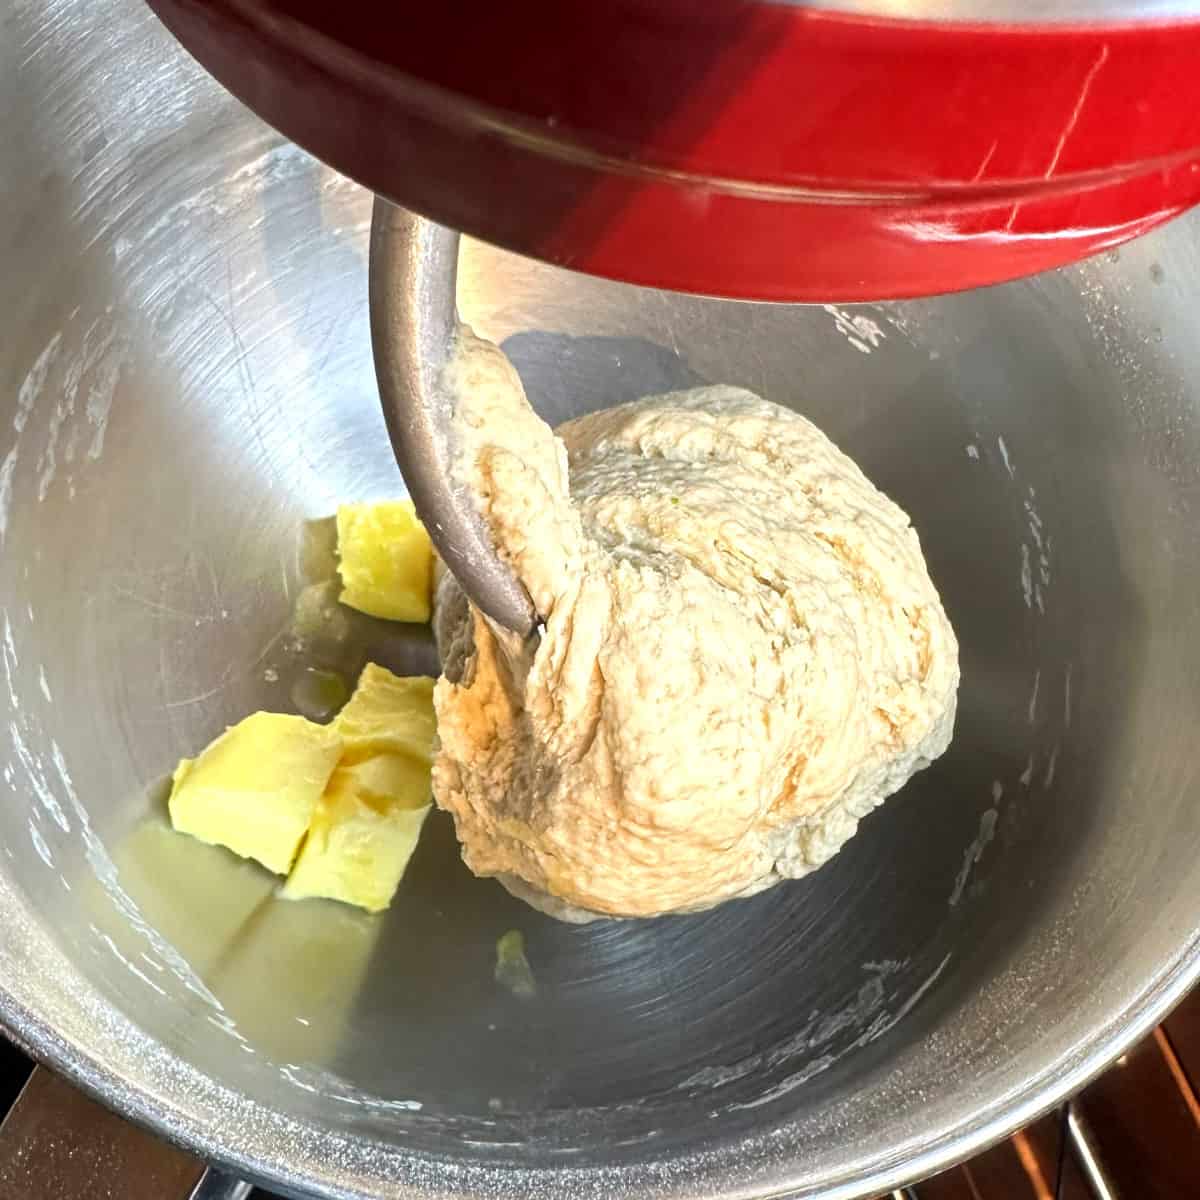 Butter added to stand mixer bowl with vegan chocolate babka dough.